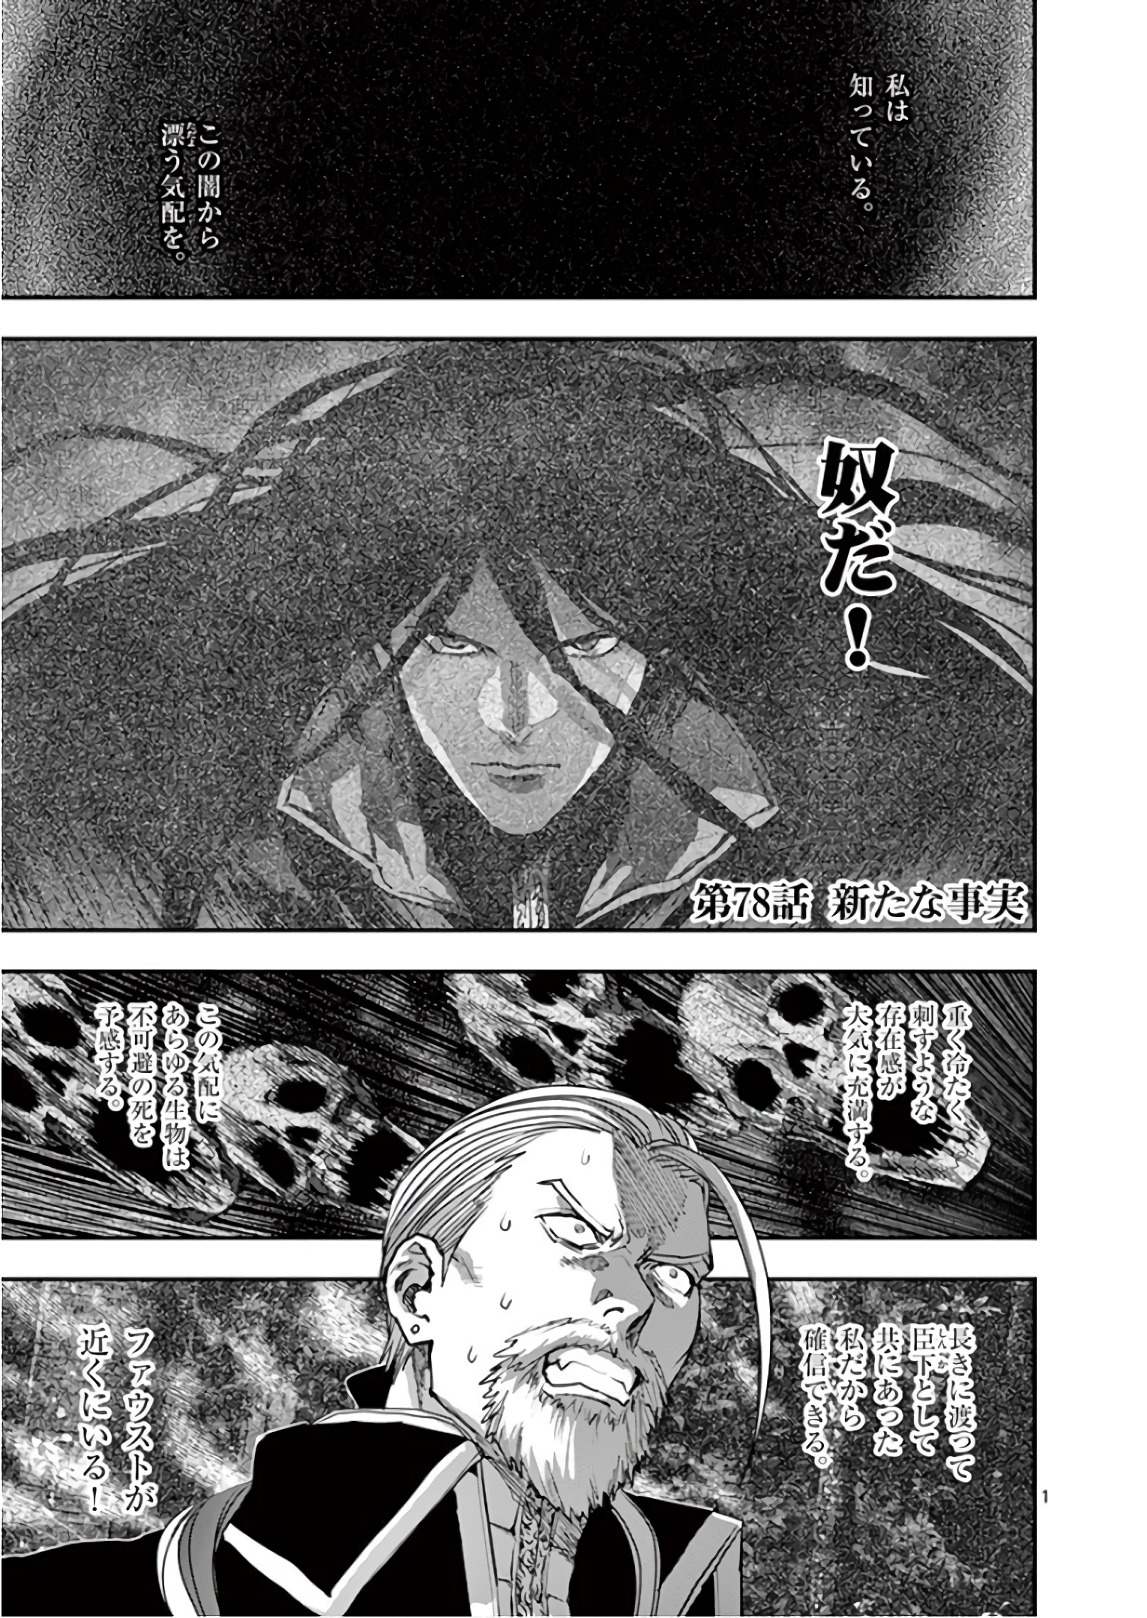 Ginrou Bloodborne - Chapter 78 - Page 1